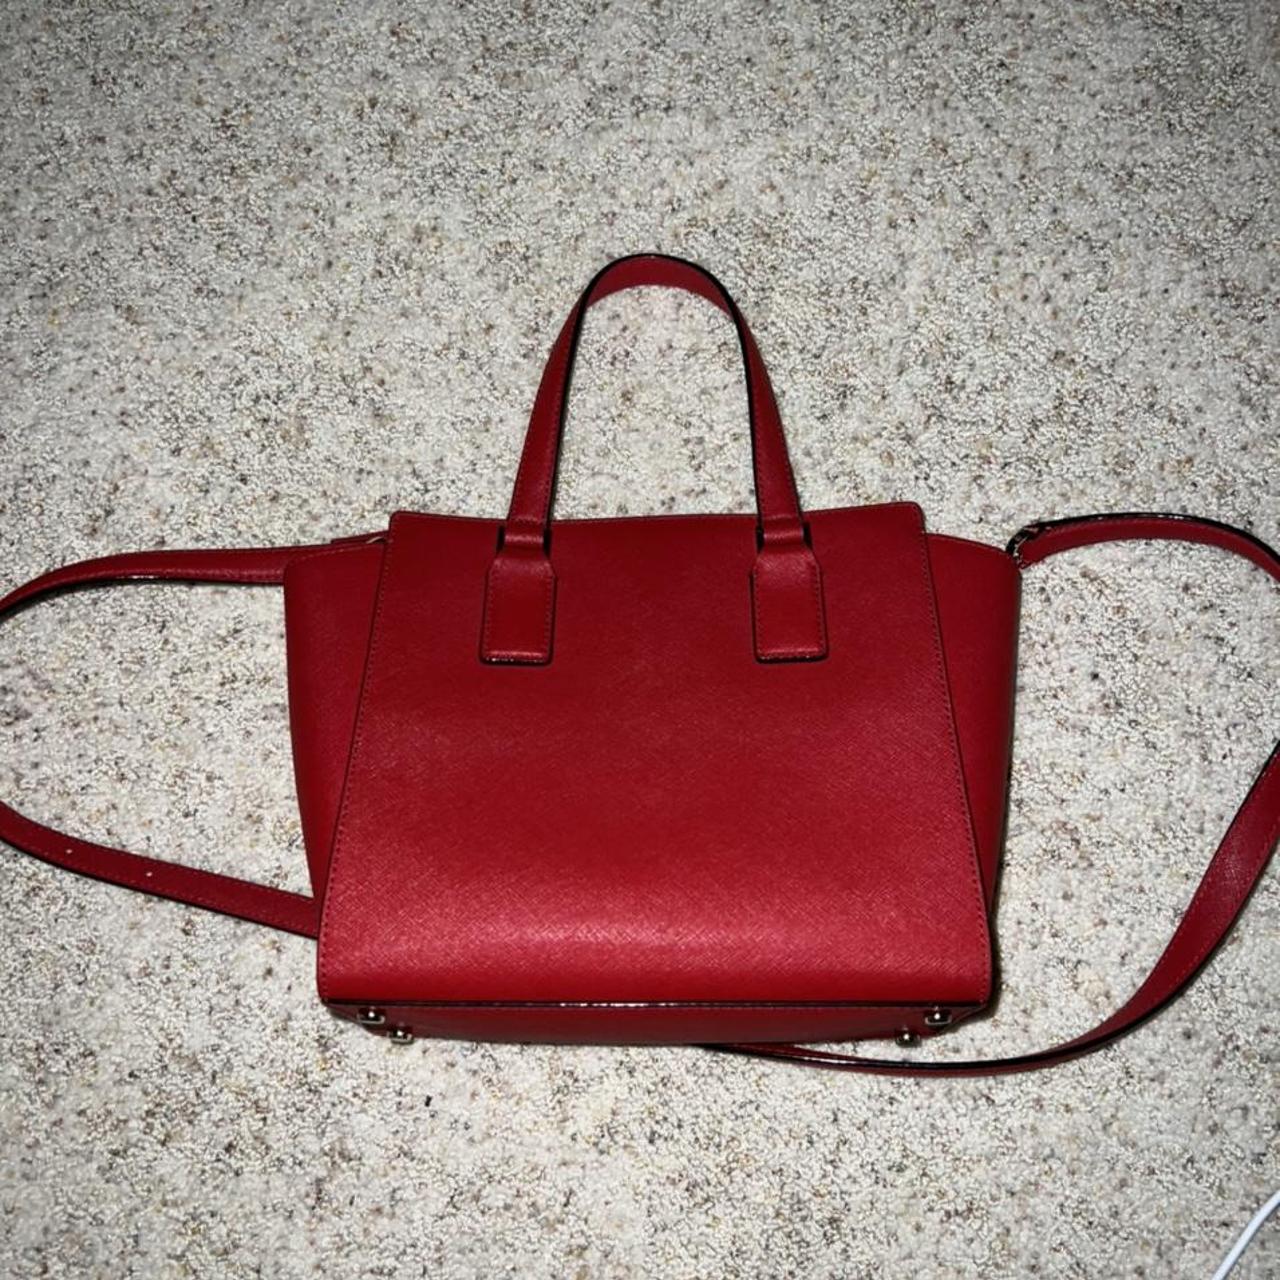 Small Ladies Bag Crossbody | Women's Shoulder Bag Red | Shoulder Bag Ladies  - Fashion - Aliexpress